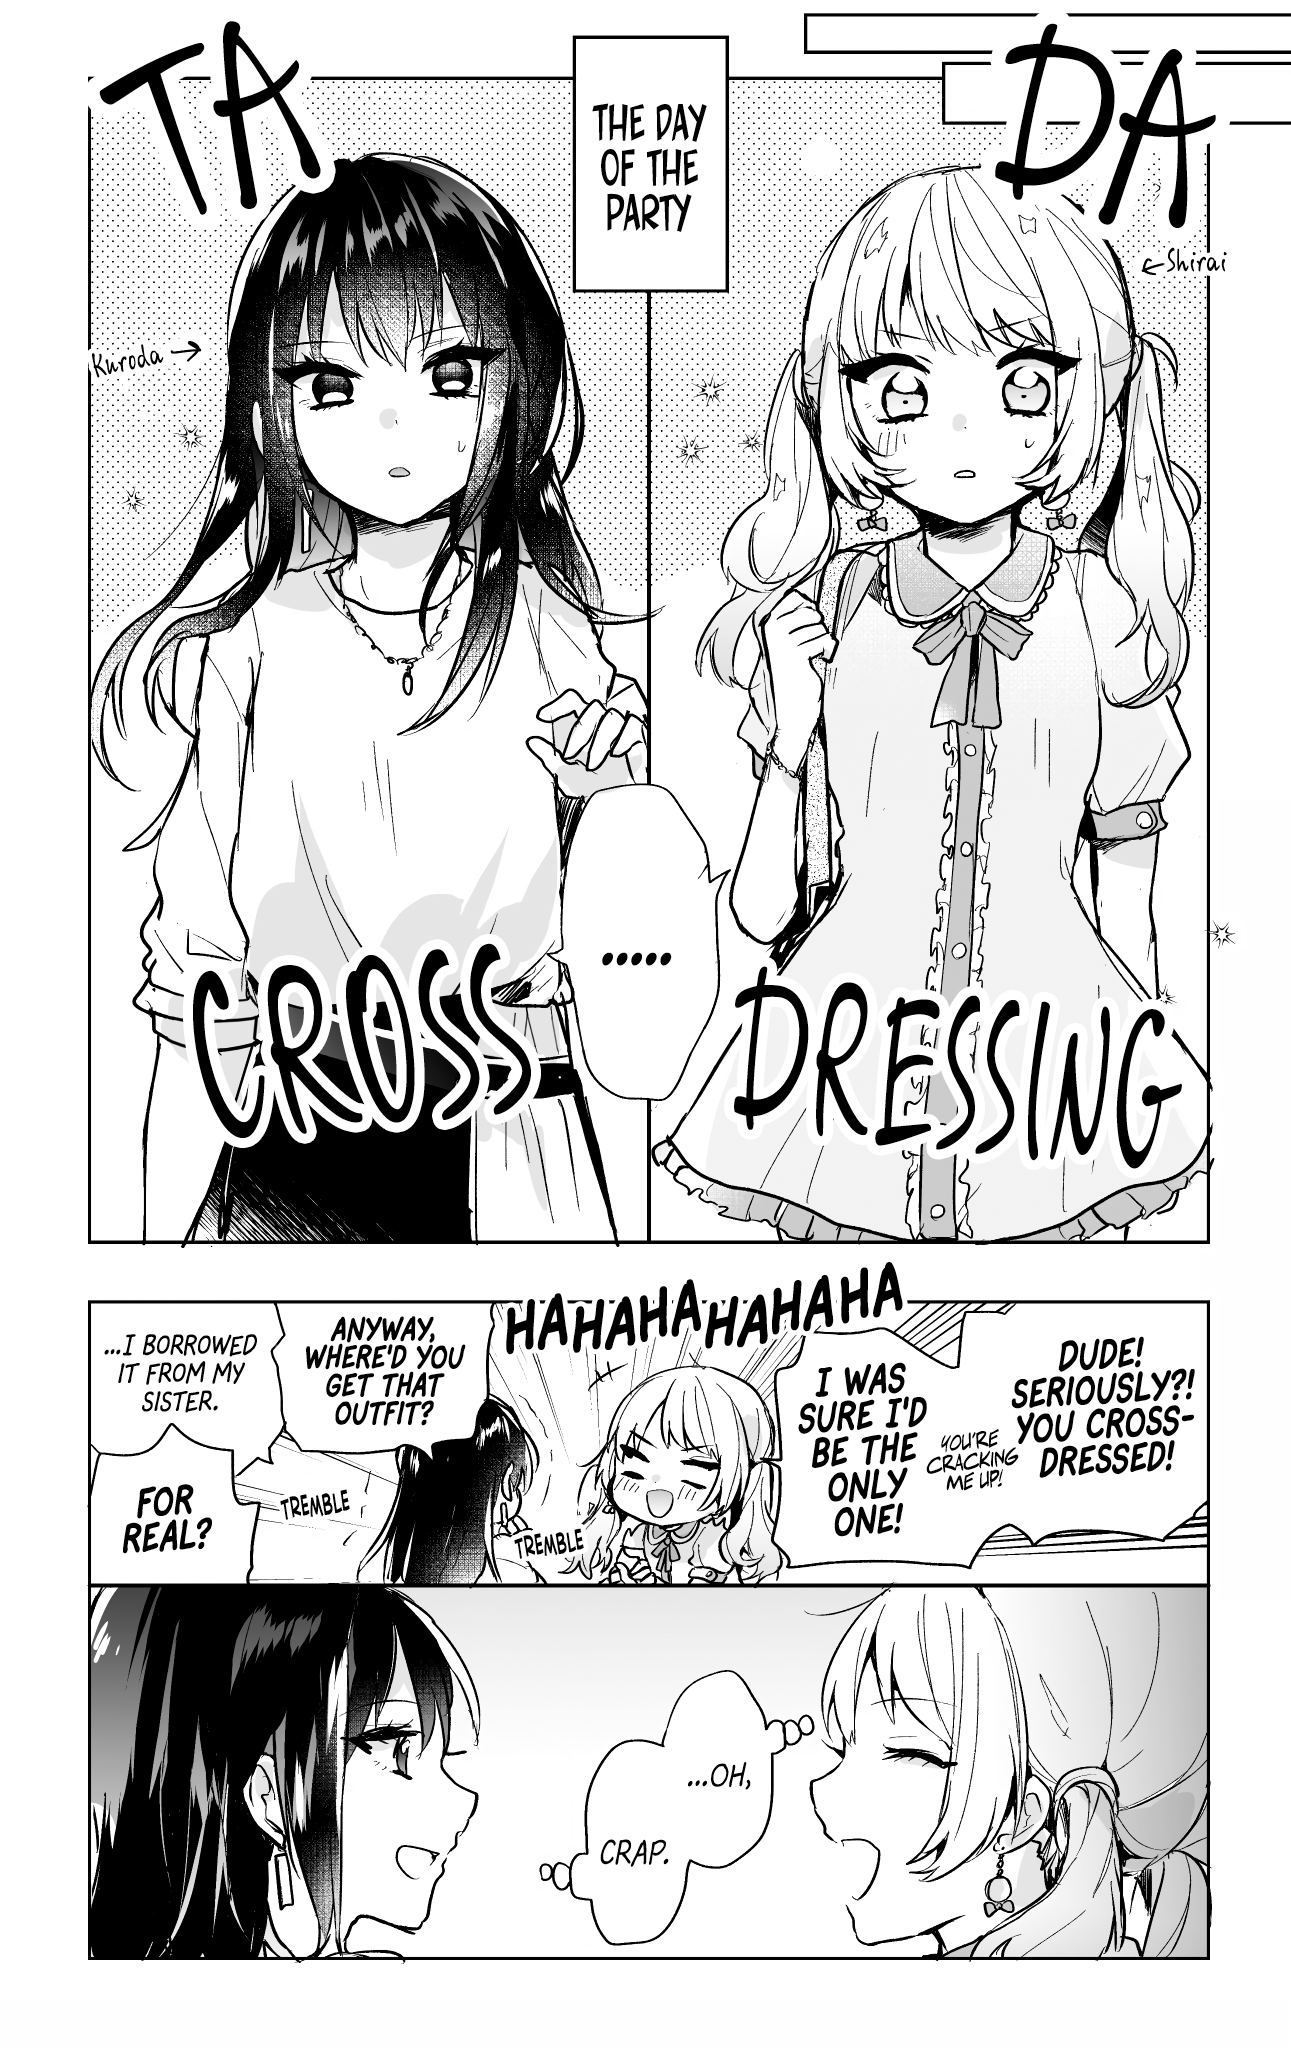 When You Crossdress to Surprise Your Friend manga